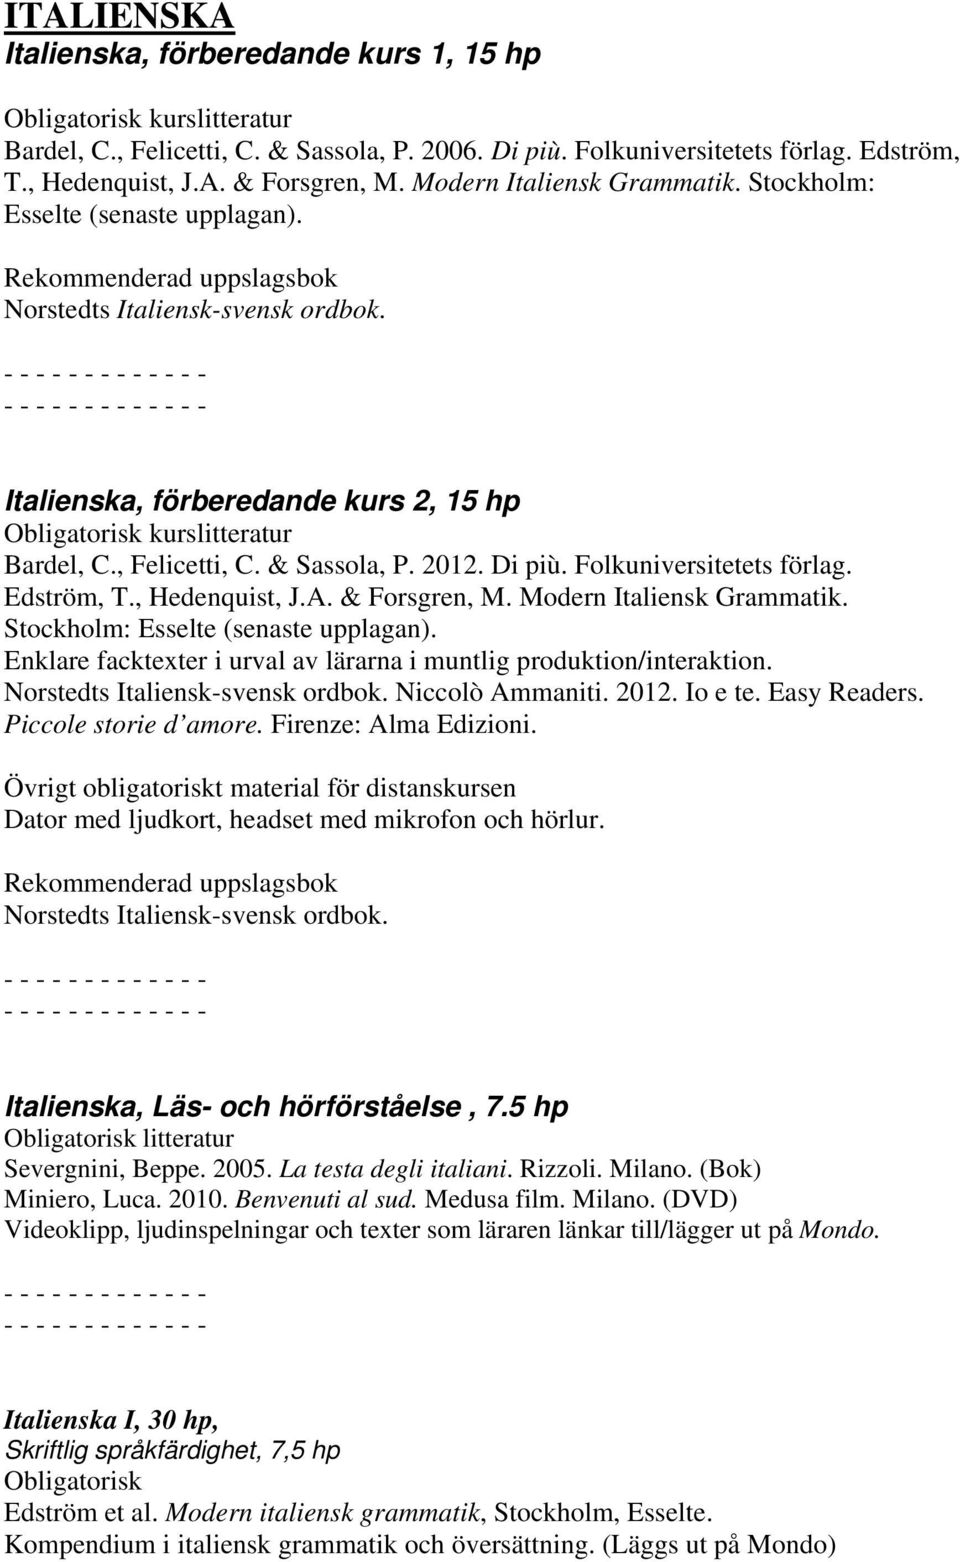 , Felicetti, C. & Sassola, P. 2012. Di più. Folkuniversitetets förlag. Edström, T., Hedenquist, J.A. & Forsgren, M. Modern Italiensk Grammatik. Stockholm: Esselte (senaste upplagan).